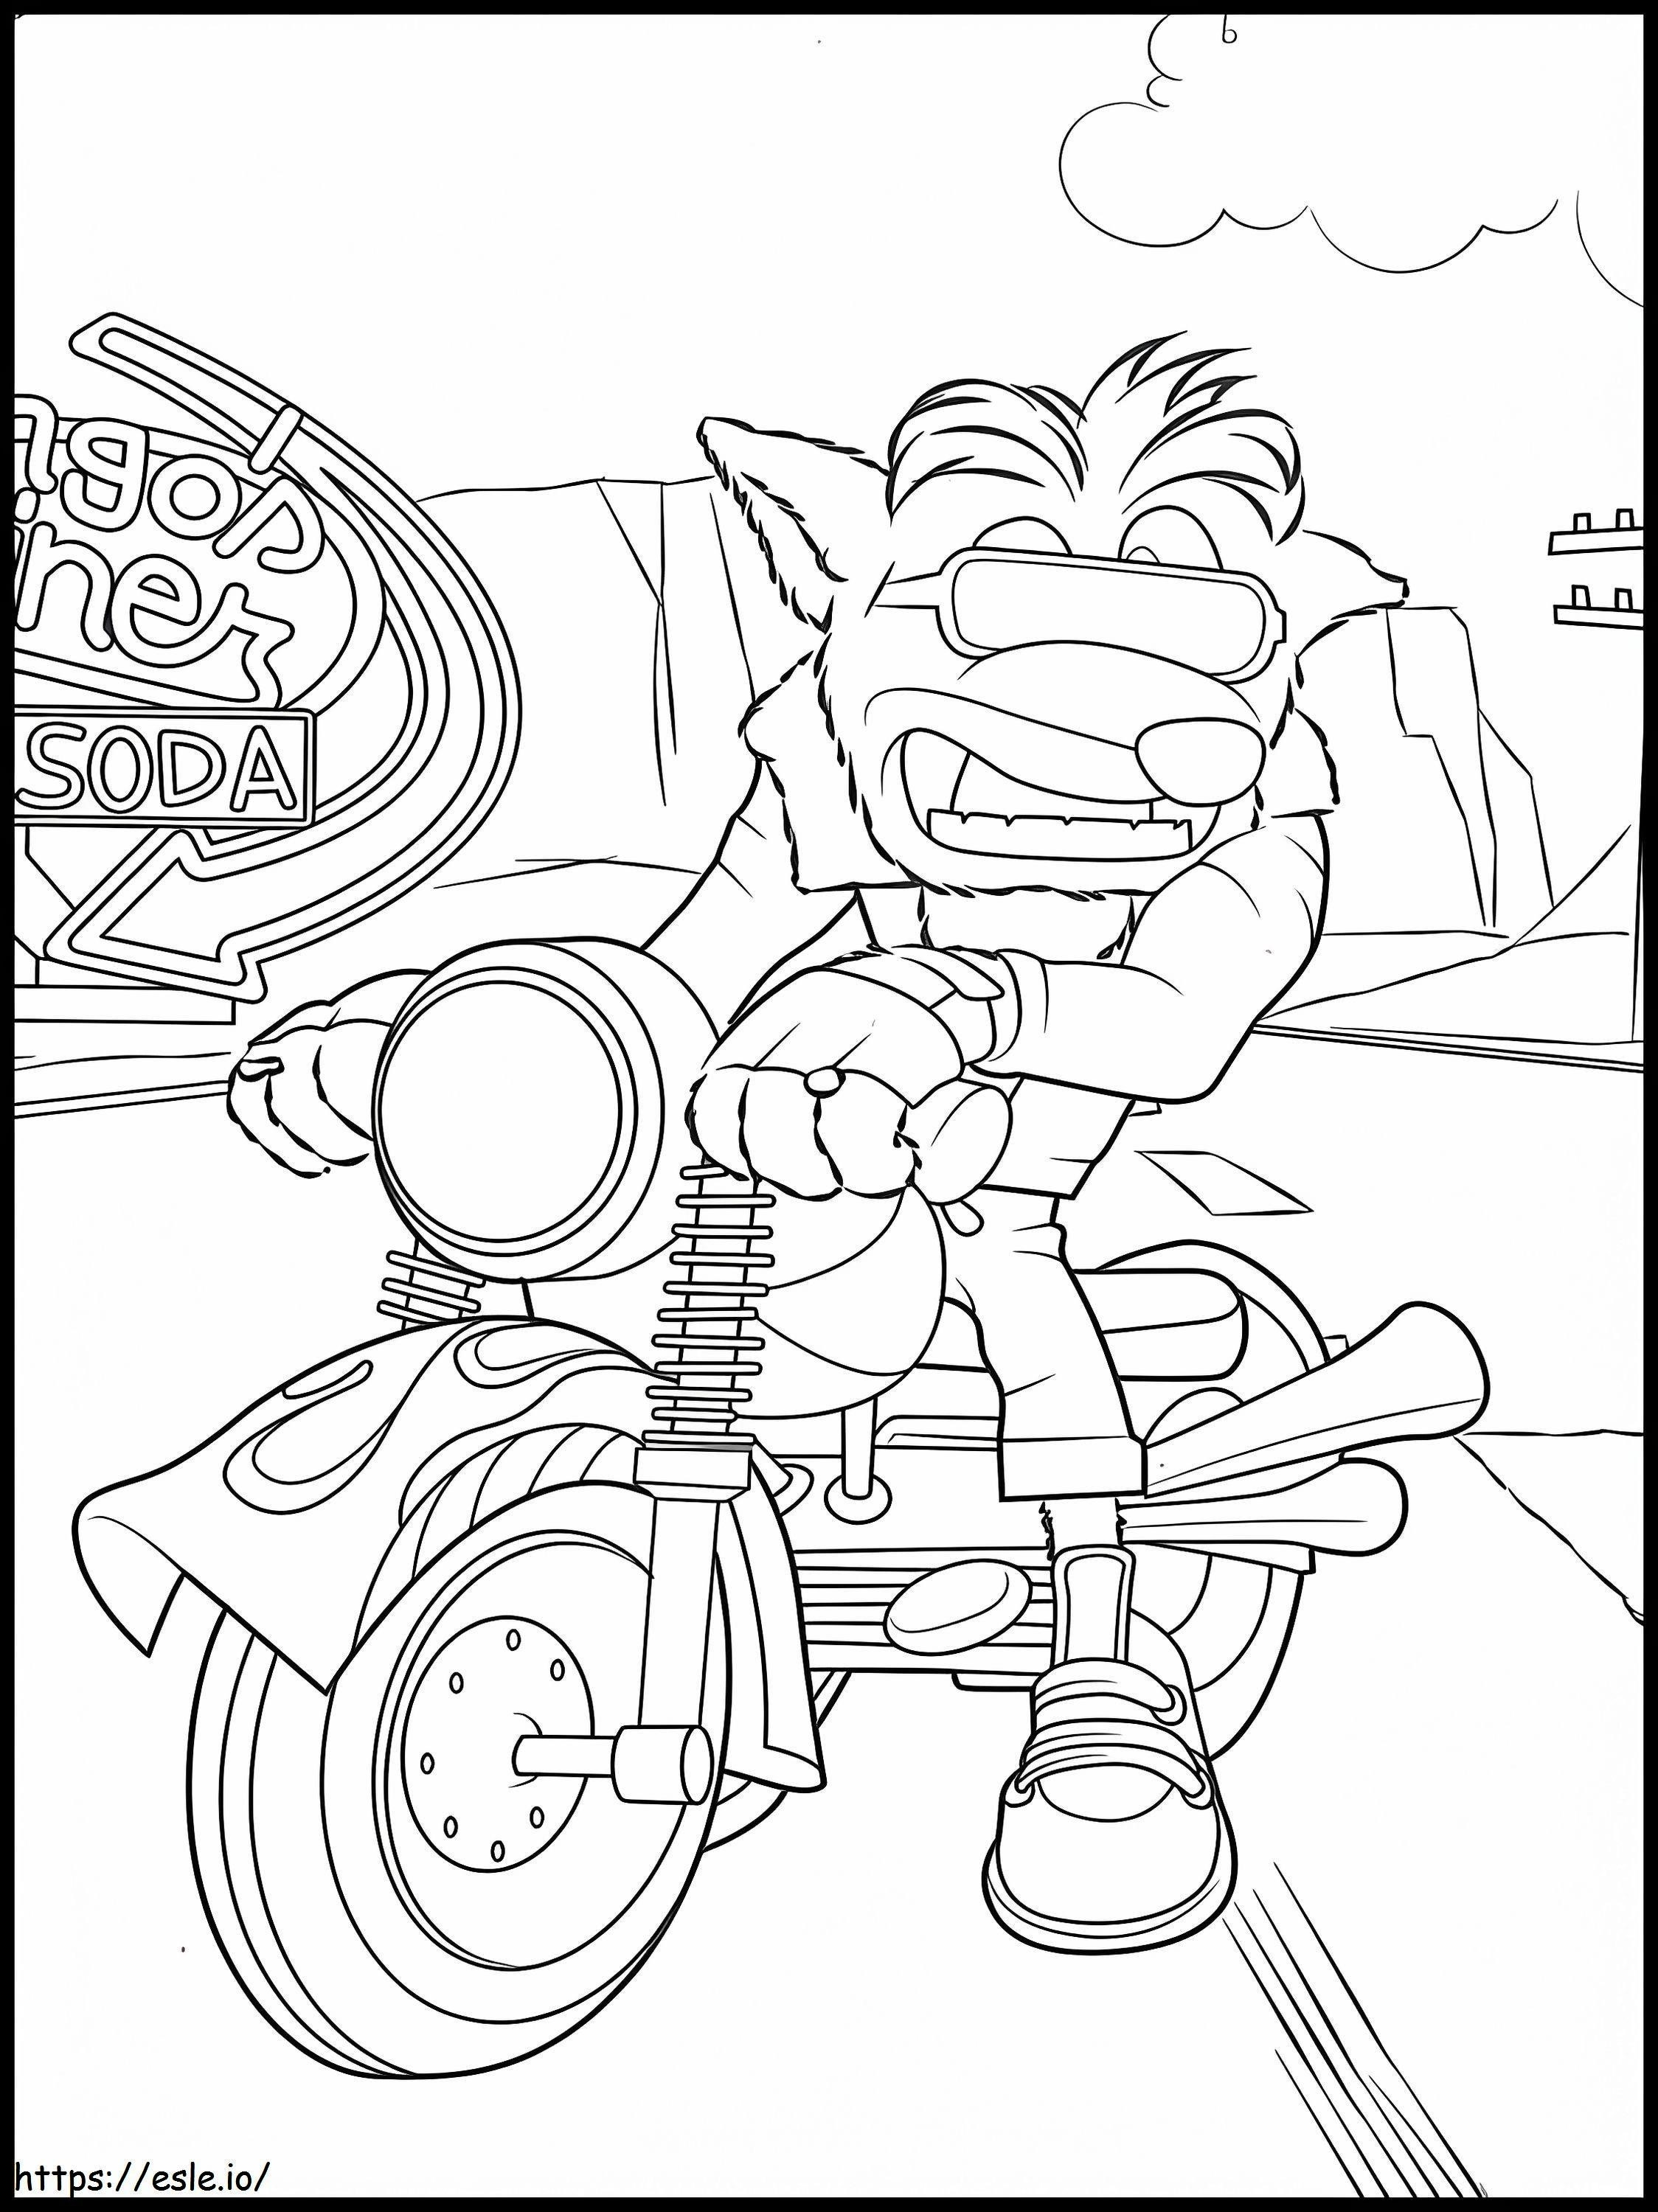 Amazing Crash Bandicoot coloring page